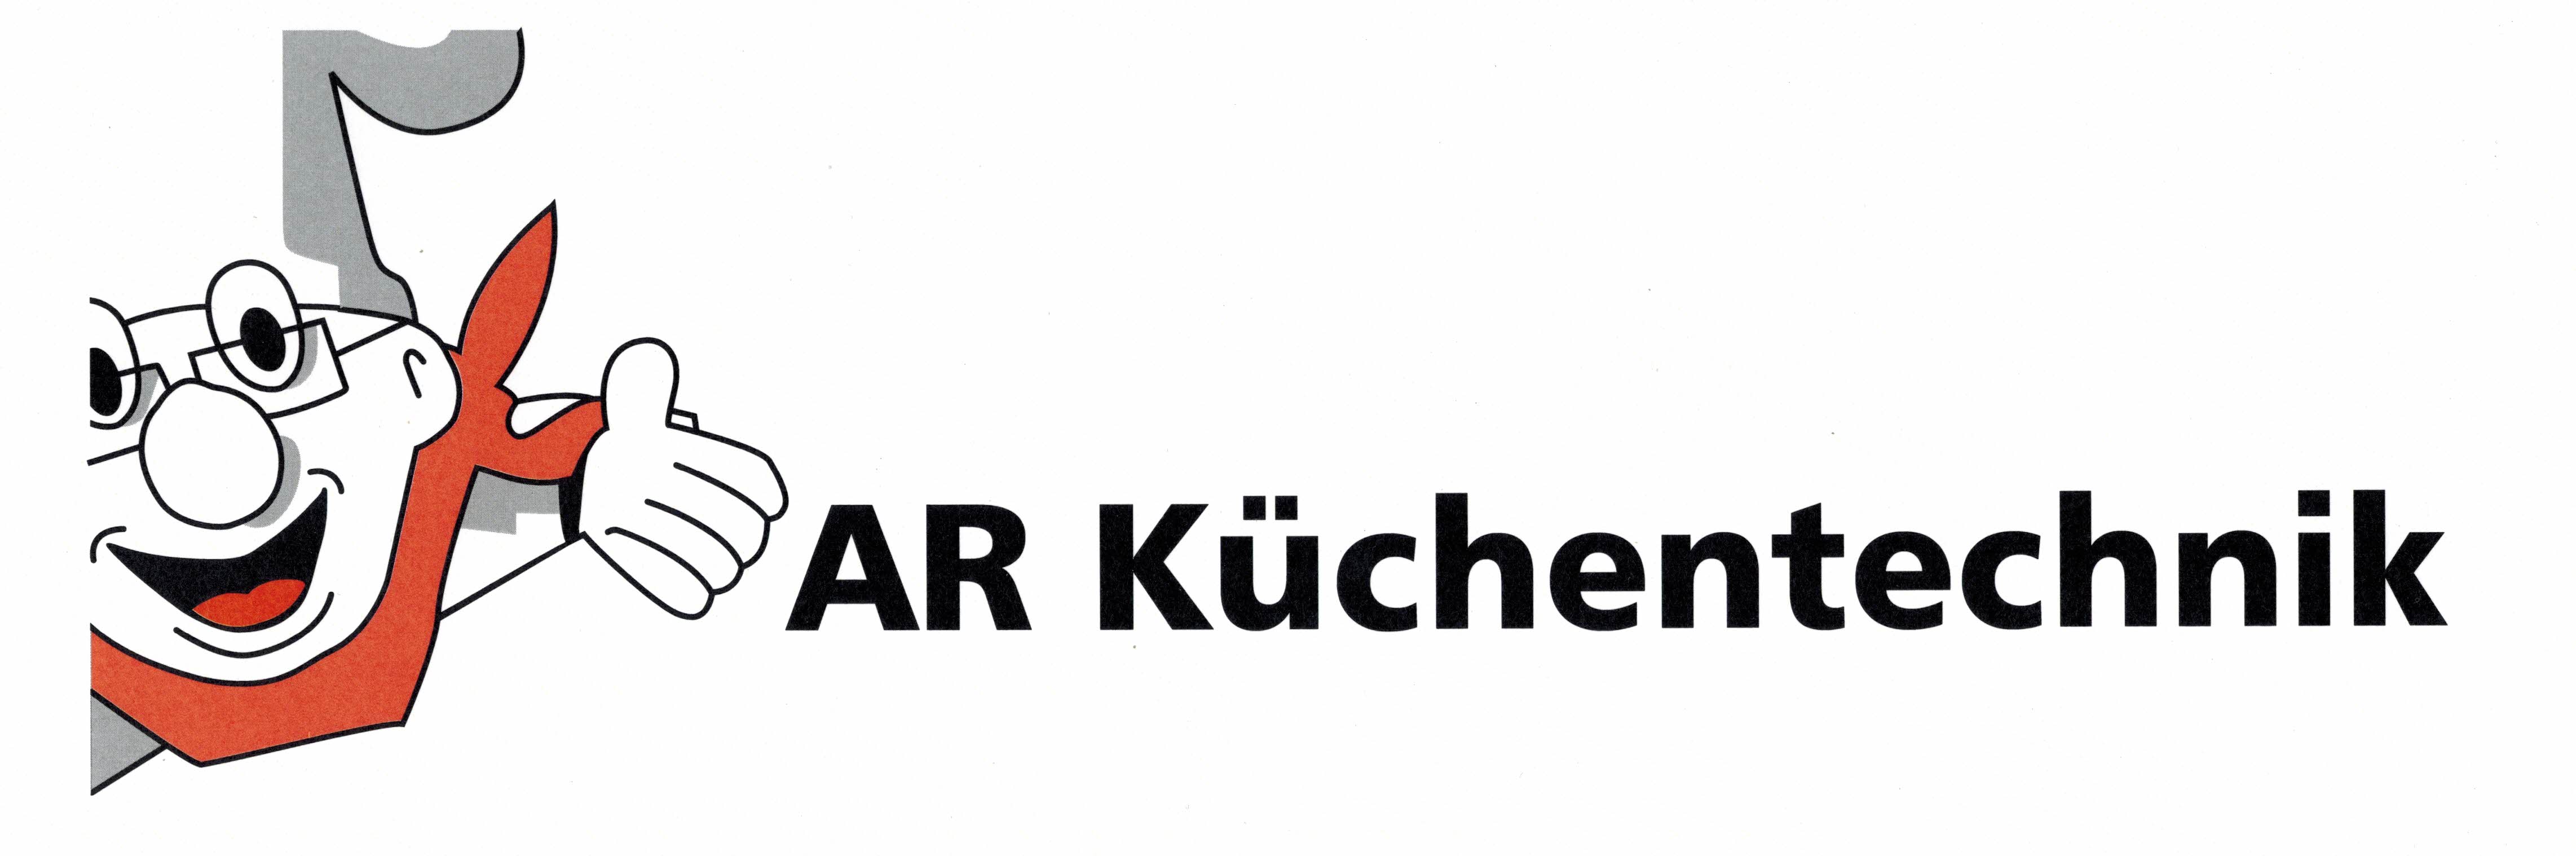 branchen logo kopf ar kuechentechnik13082019